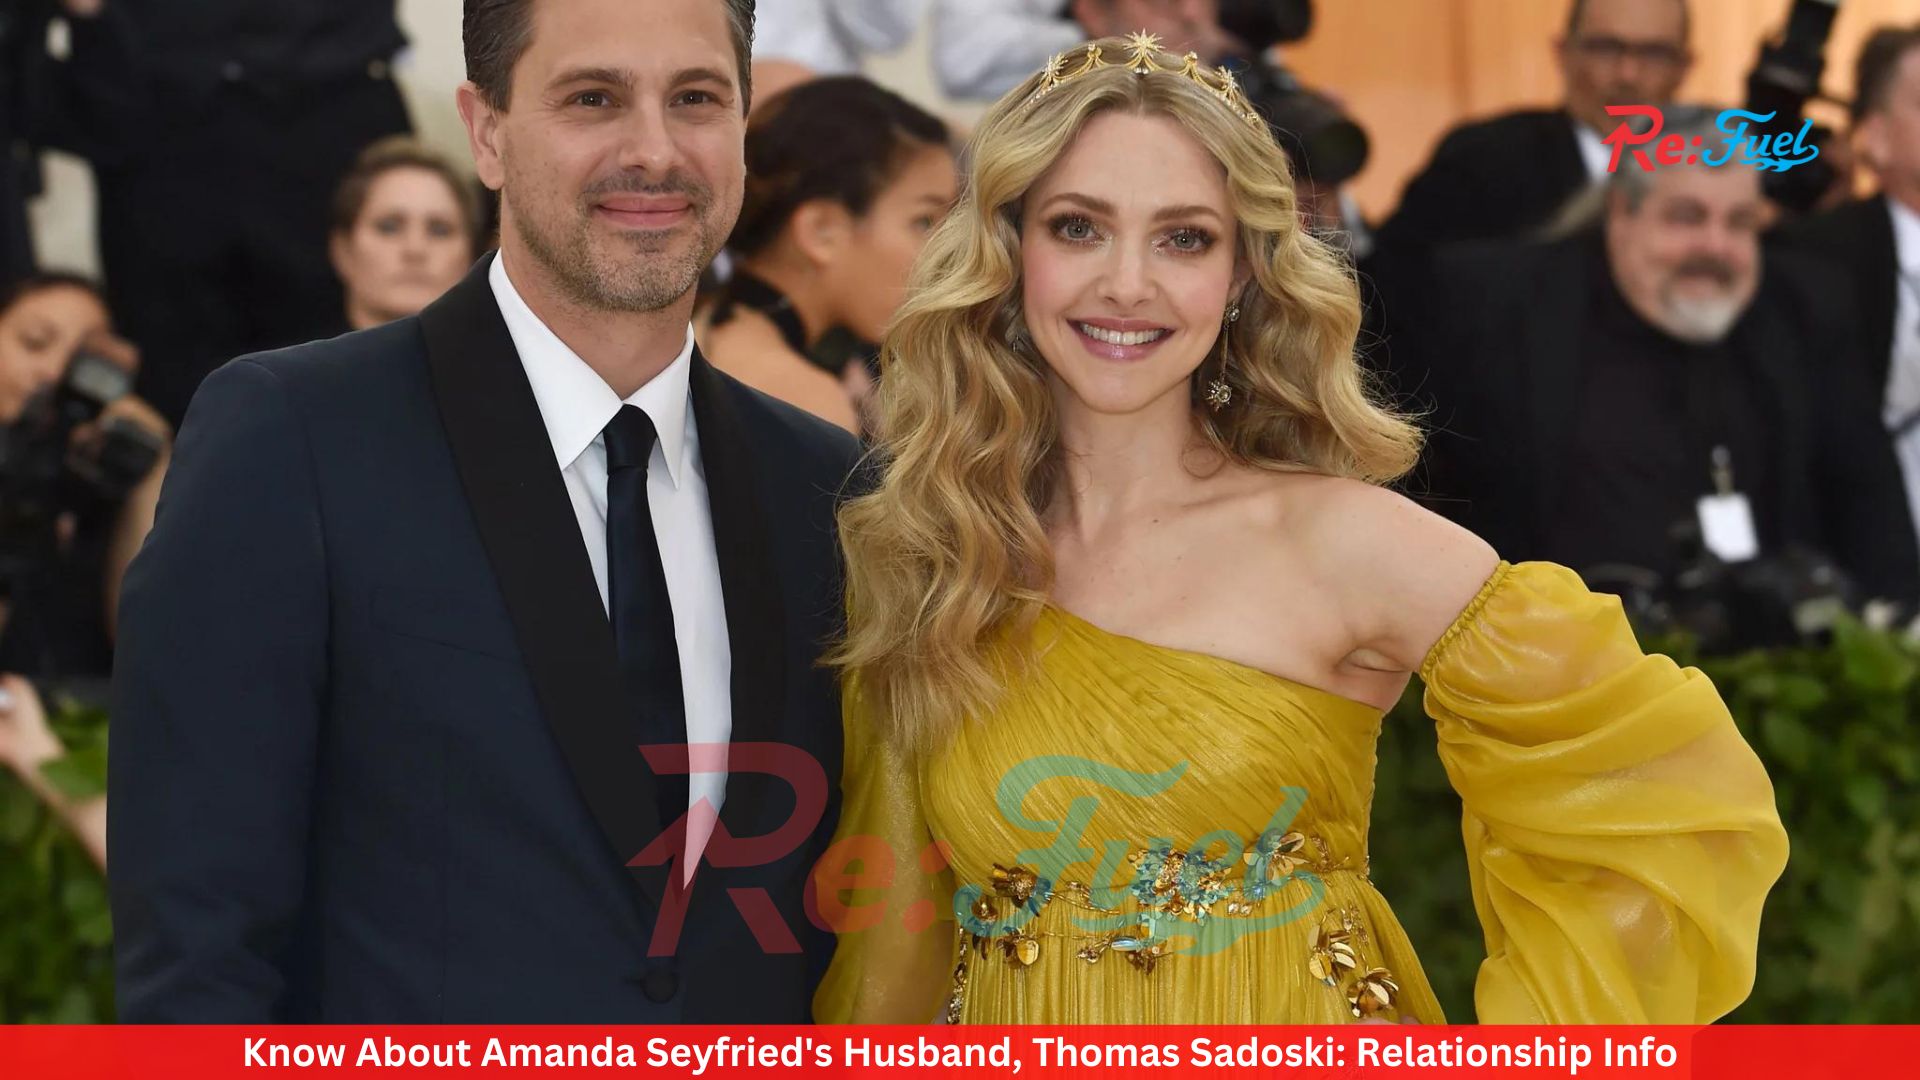 Know About Amanda Seyfried's Husband, Thomas Sadoski: Relationship Info